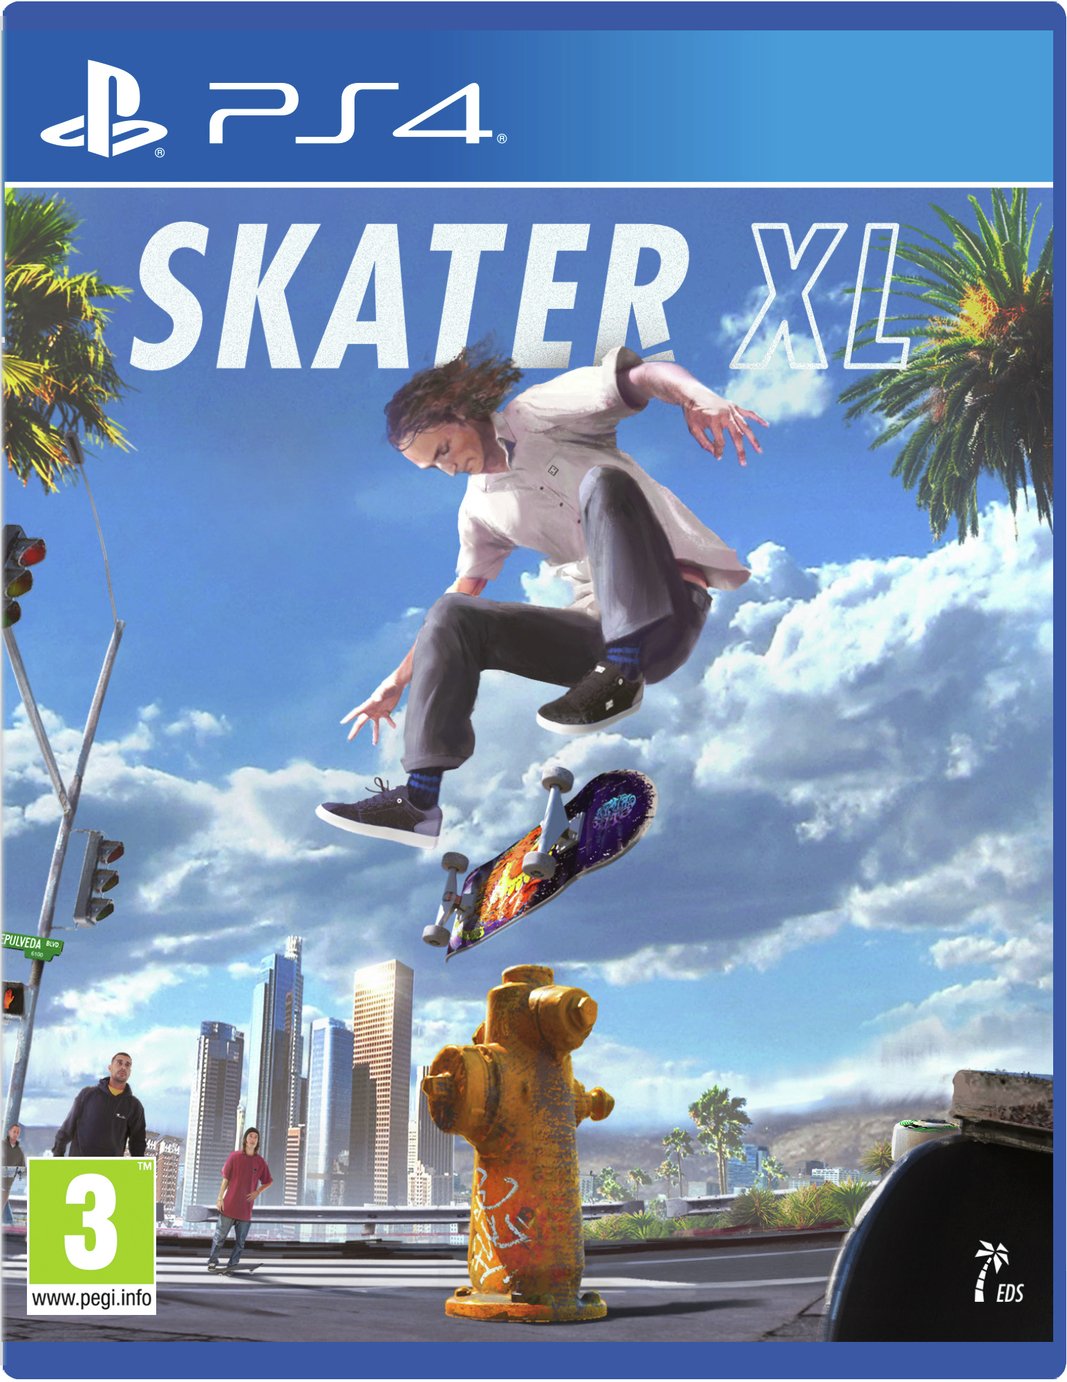 ps4 skateboard games